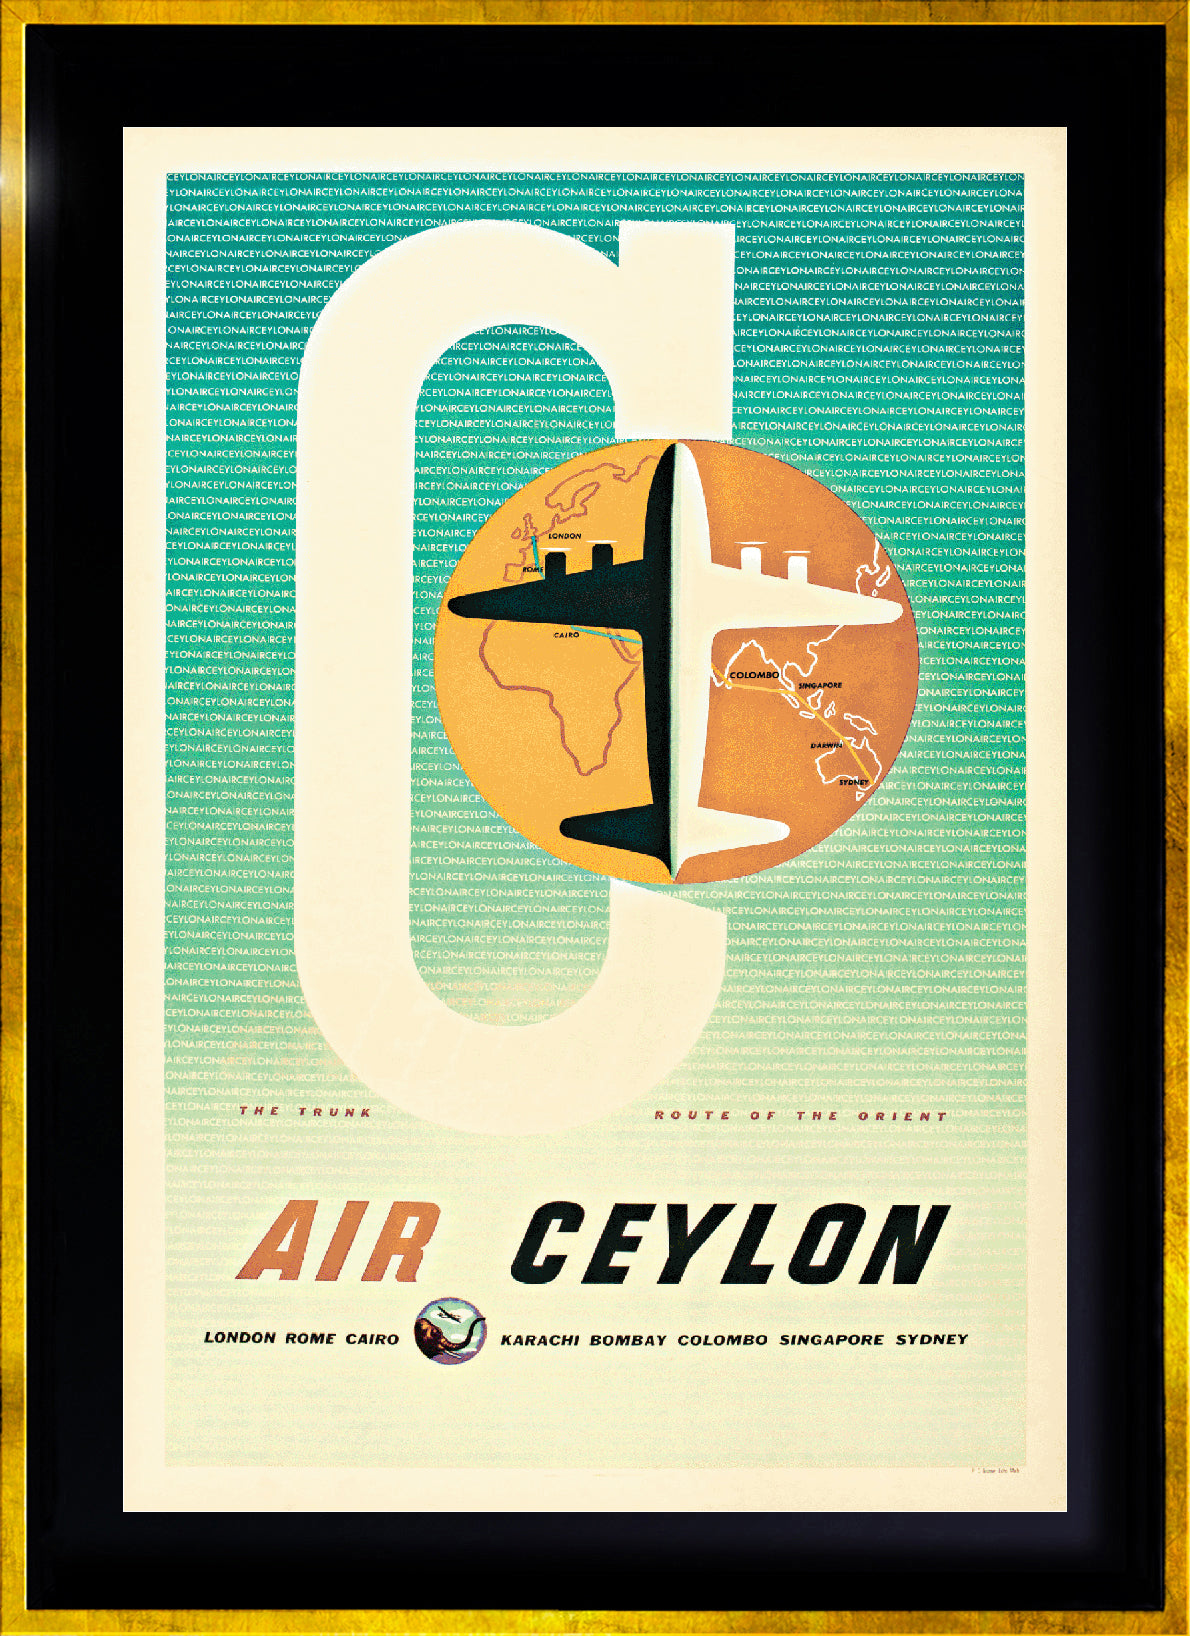 "Big C” [White] London - Rome - Cairo - Karachi - Ceylon - Sydney Via Air Ceylon 1953.